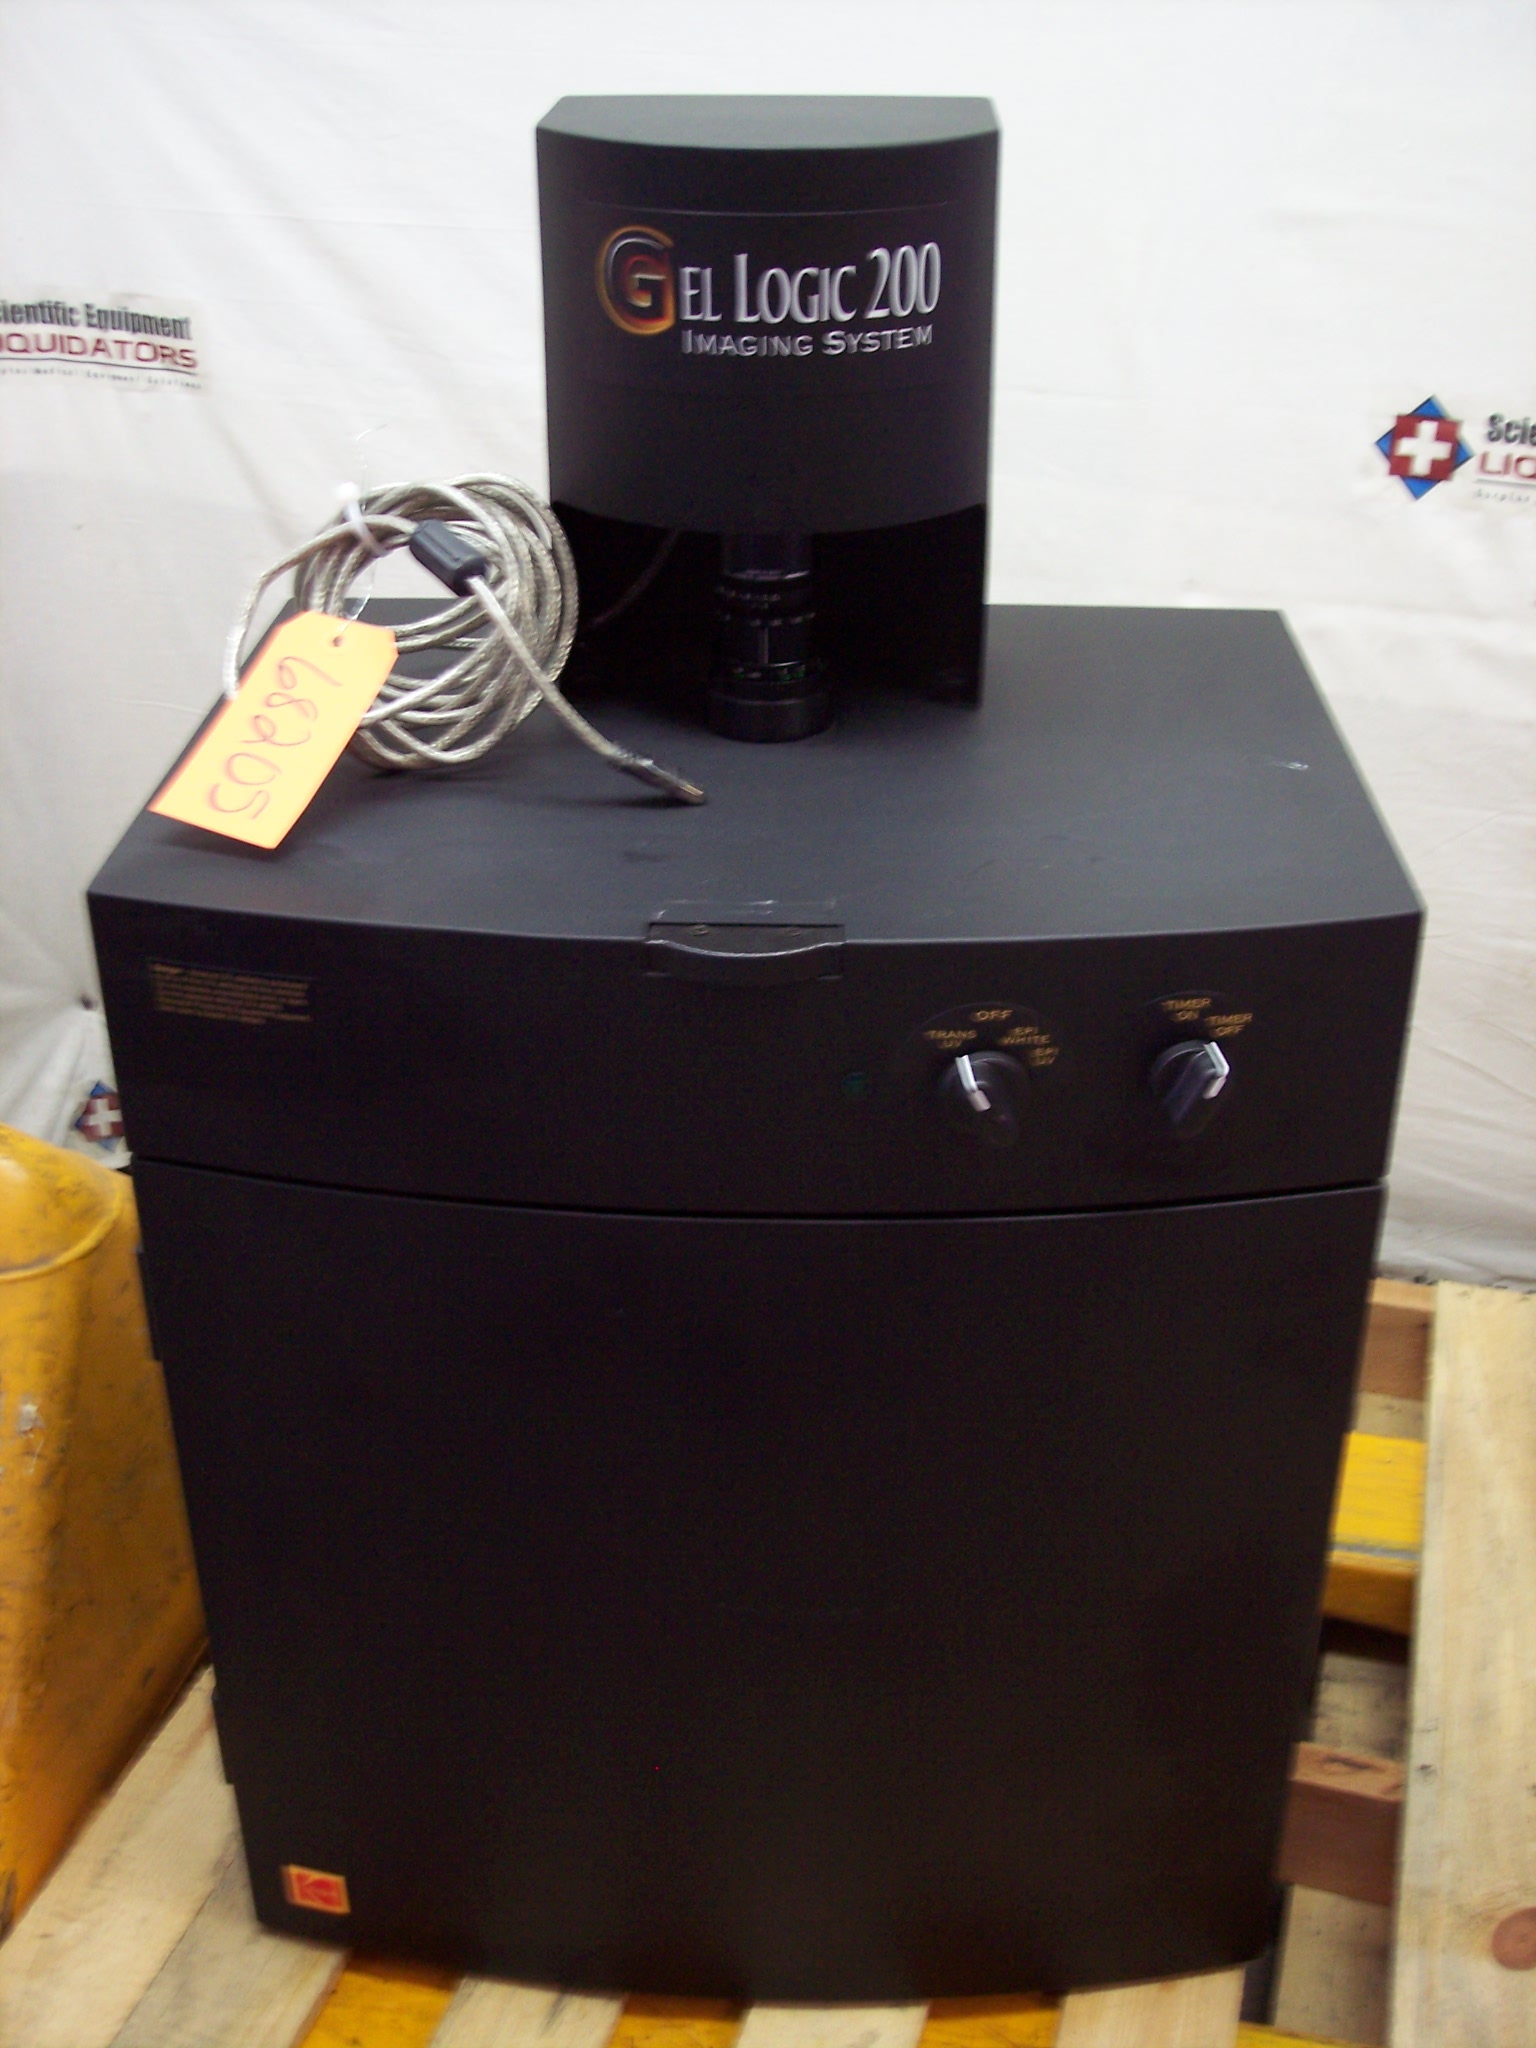 Kodak Gel Logic 200 Imaging System